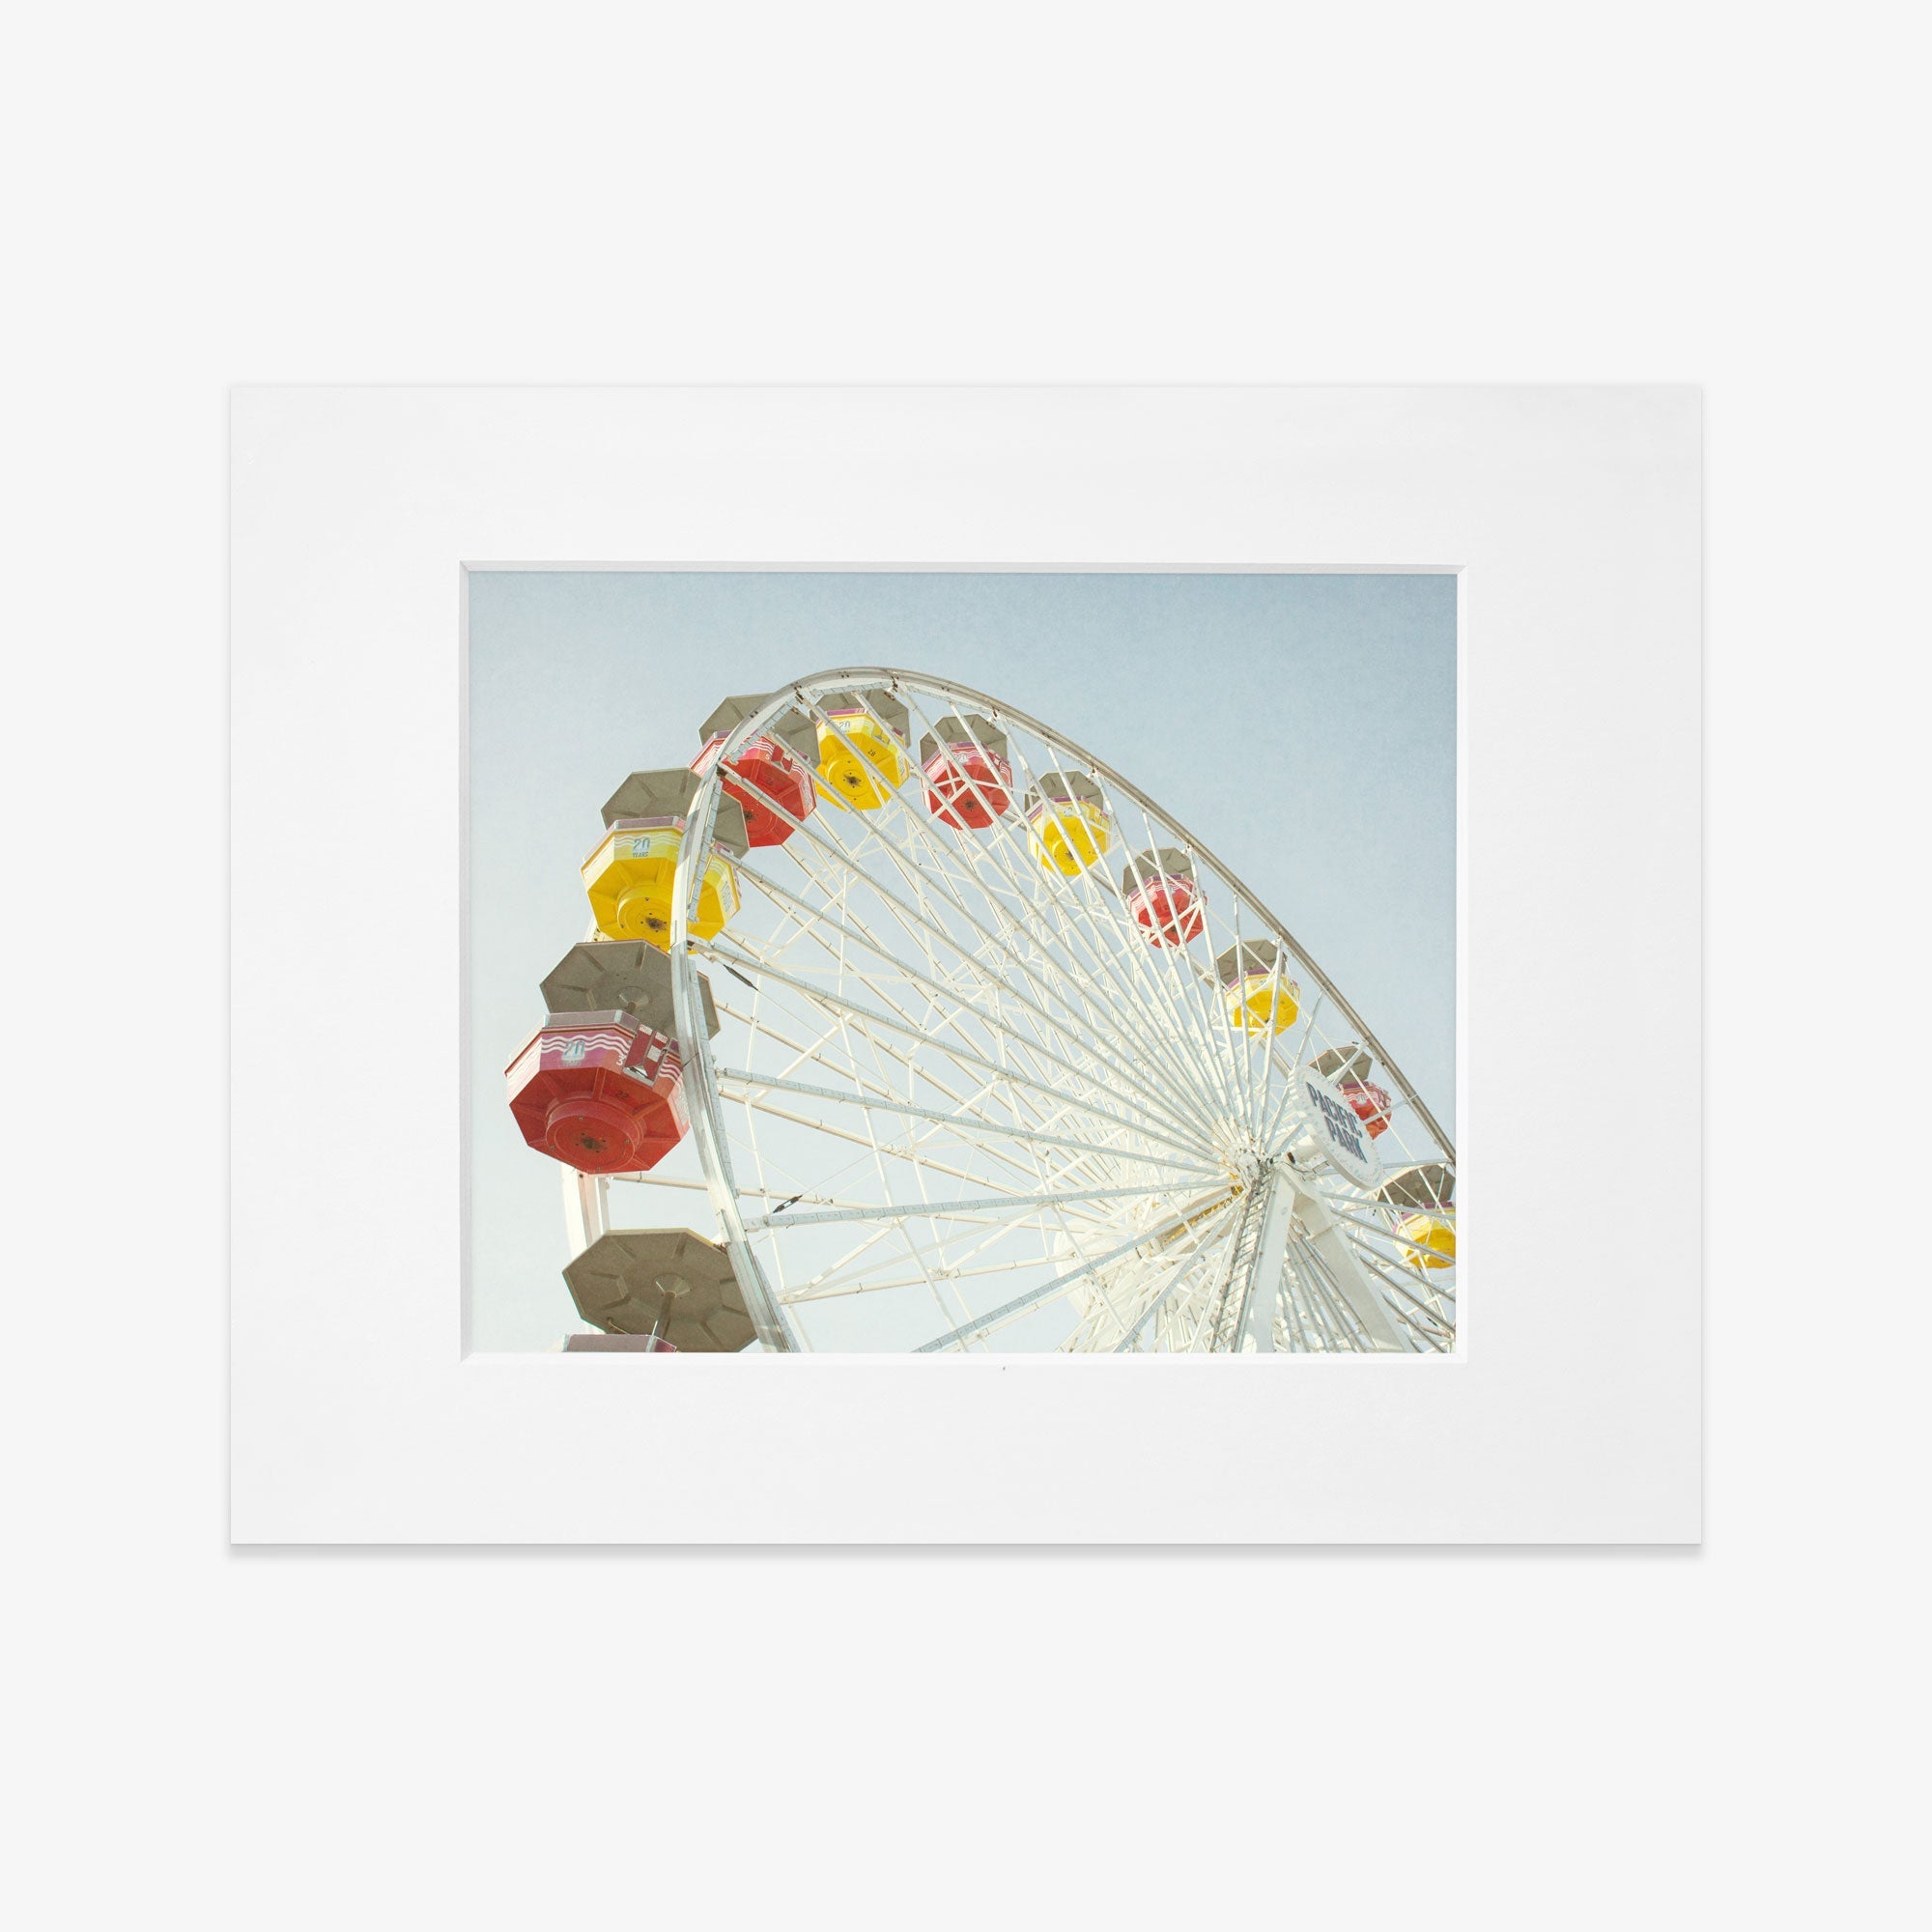 A colorful Santa Monica Ferris Wheel Print, &#39;Ferris Above&#39; at Santa Monica Pier set against a clear blue sky, framed in a simple white border by Offley Green.